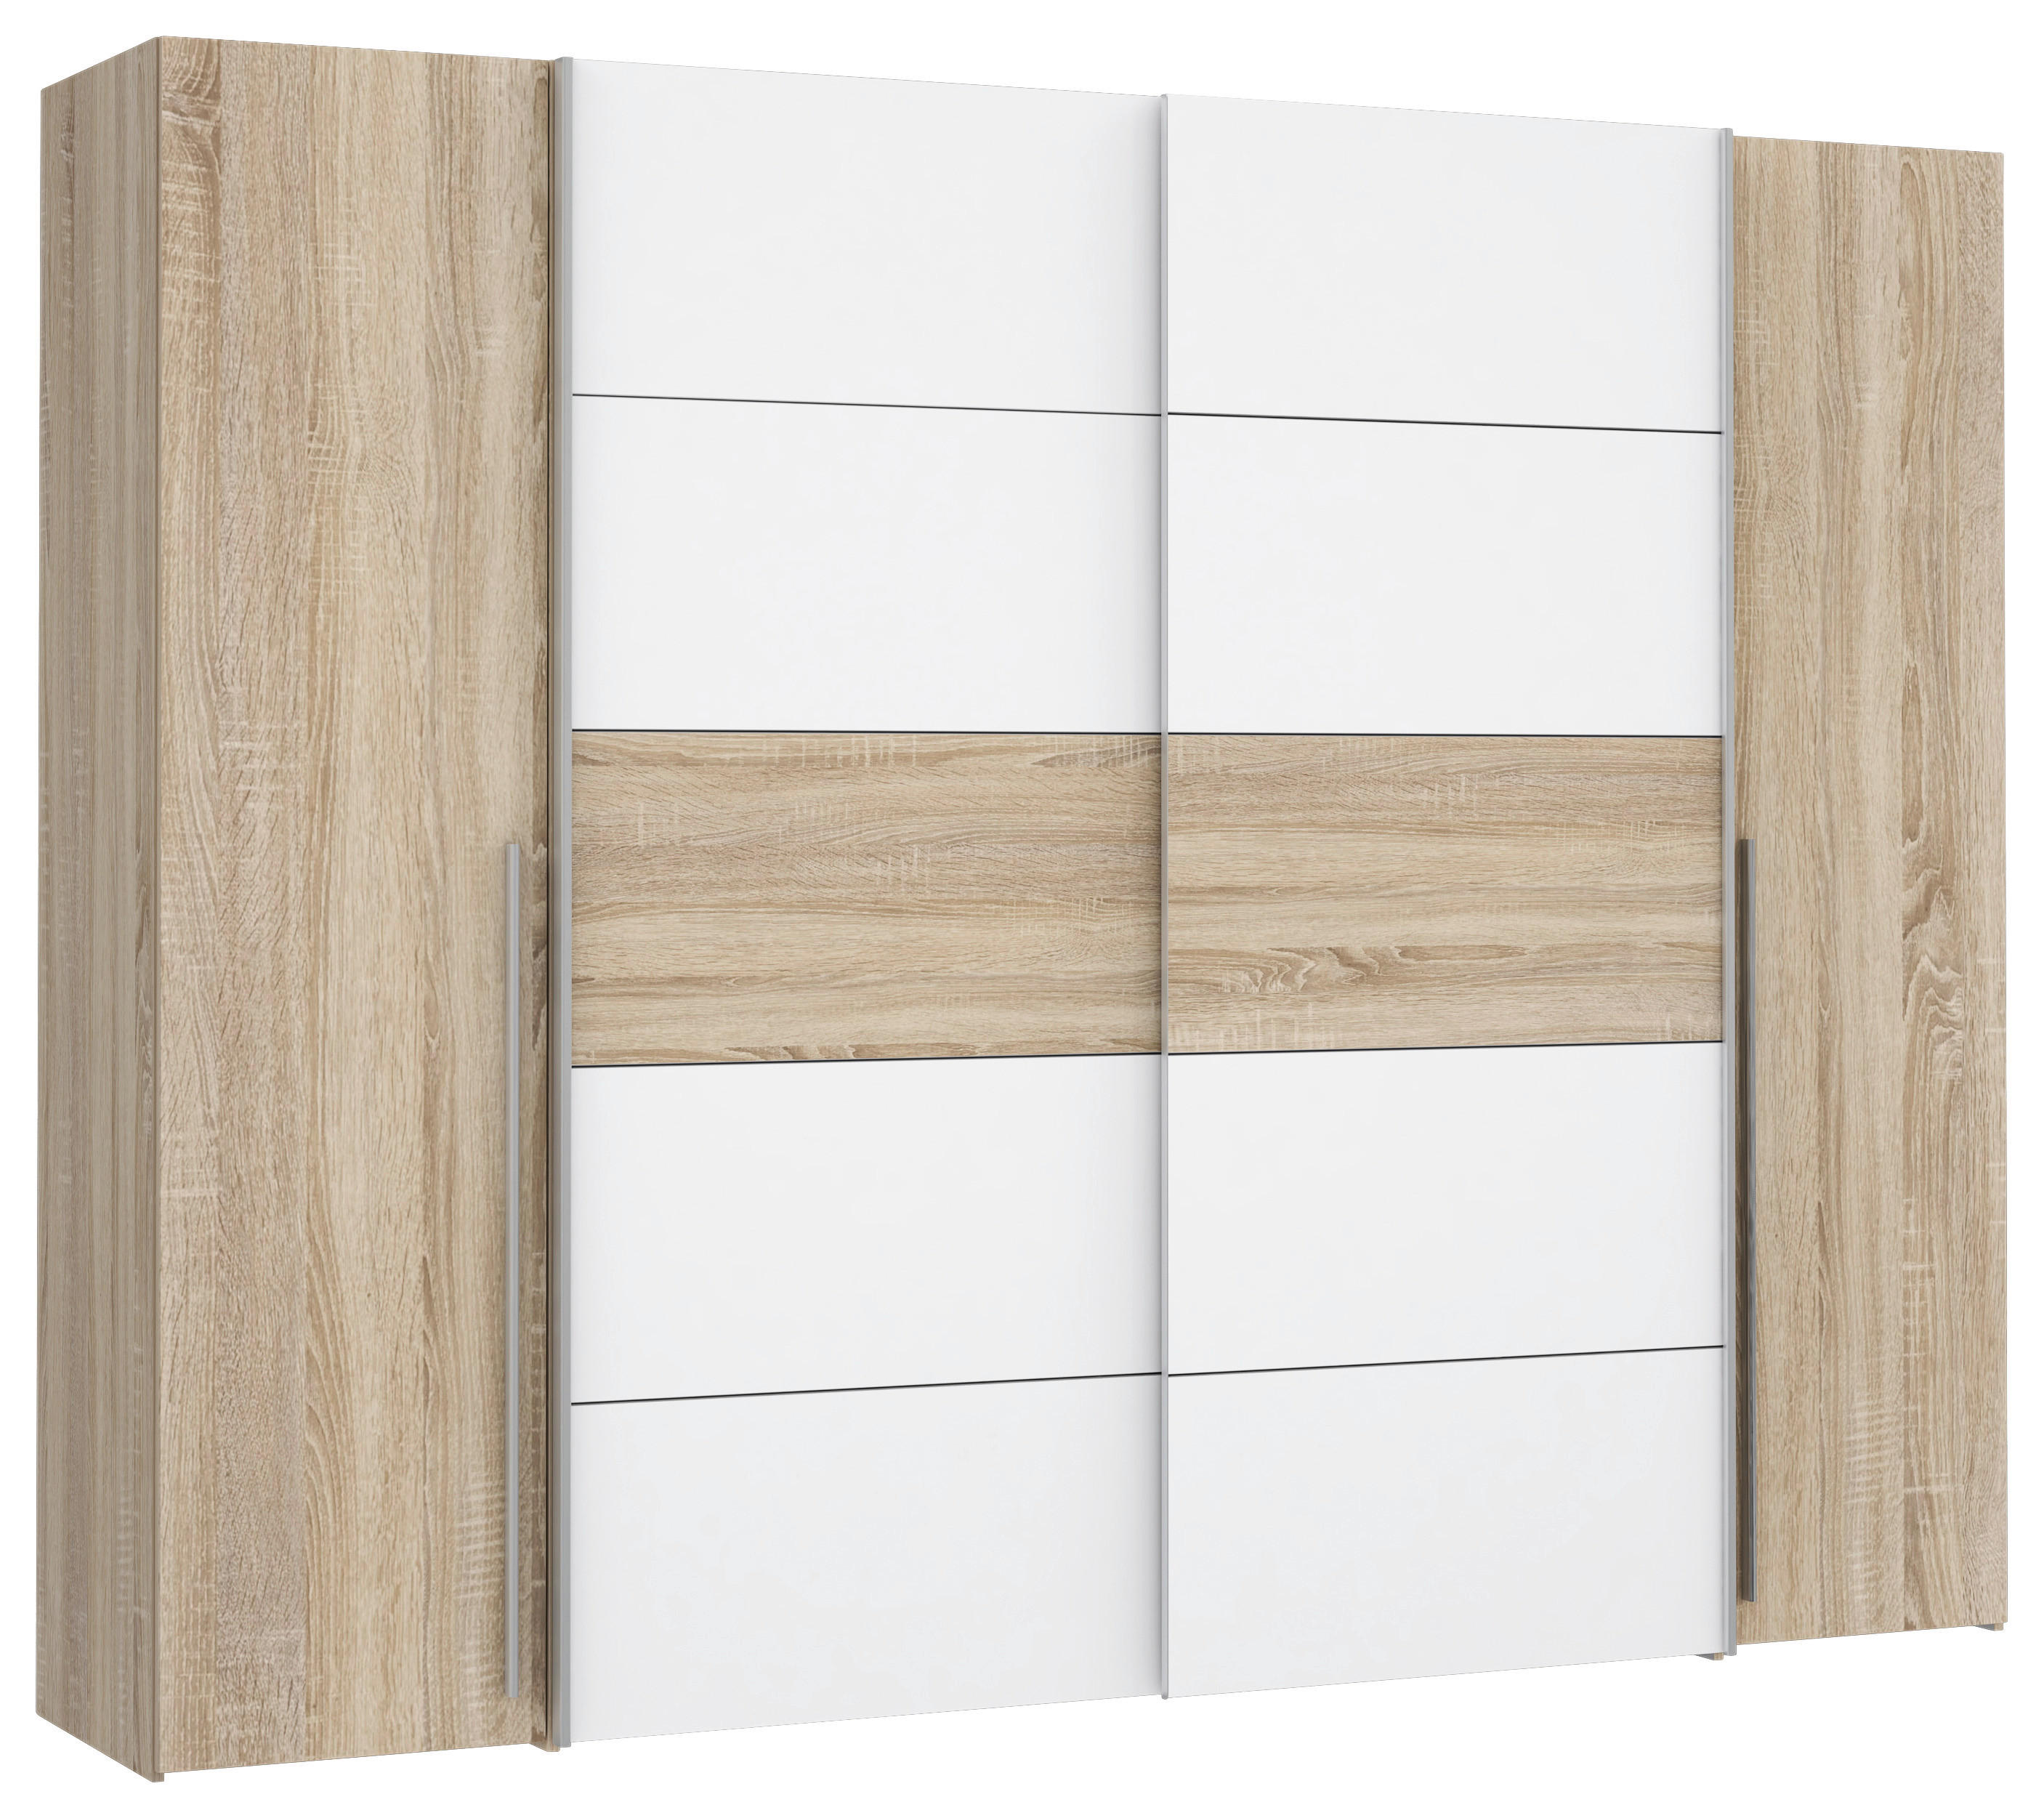 GARDEROB 270/210/61 cm 4-dörrar - vit/Sonoma ek, Klassisk, metall/träbaserade material (270/210/61cm) - MID.YOU